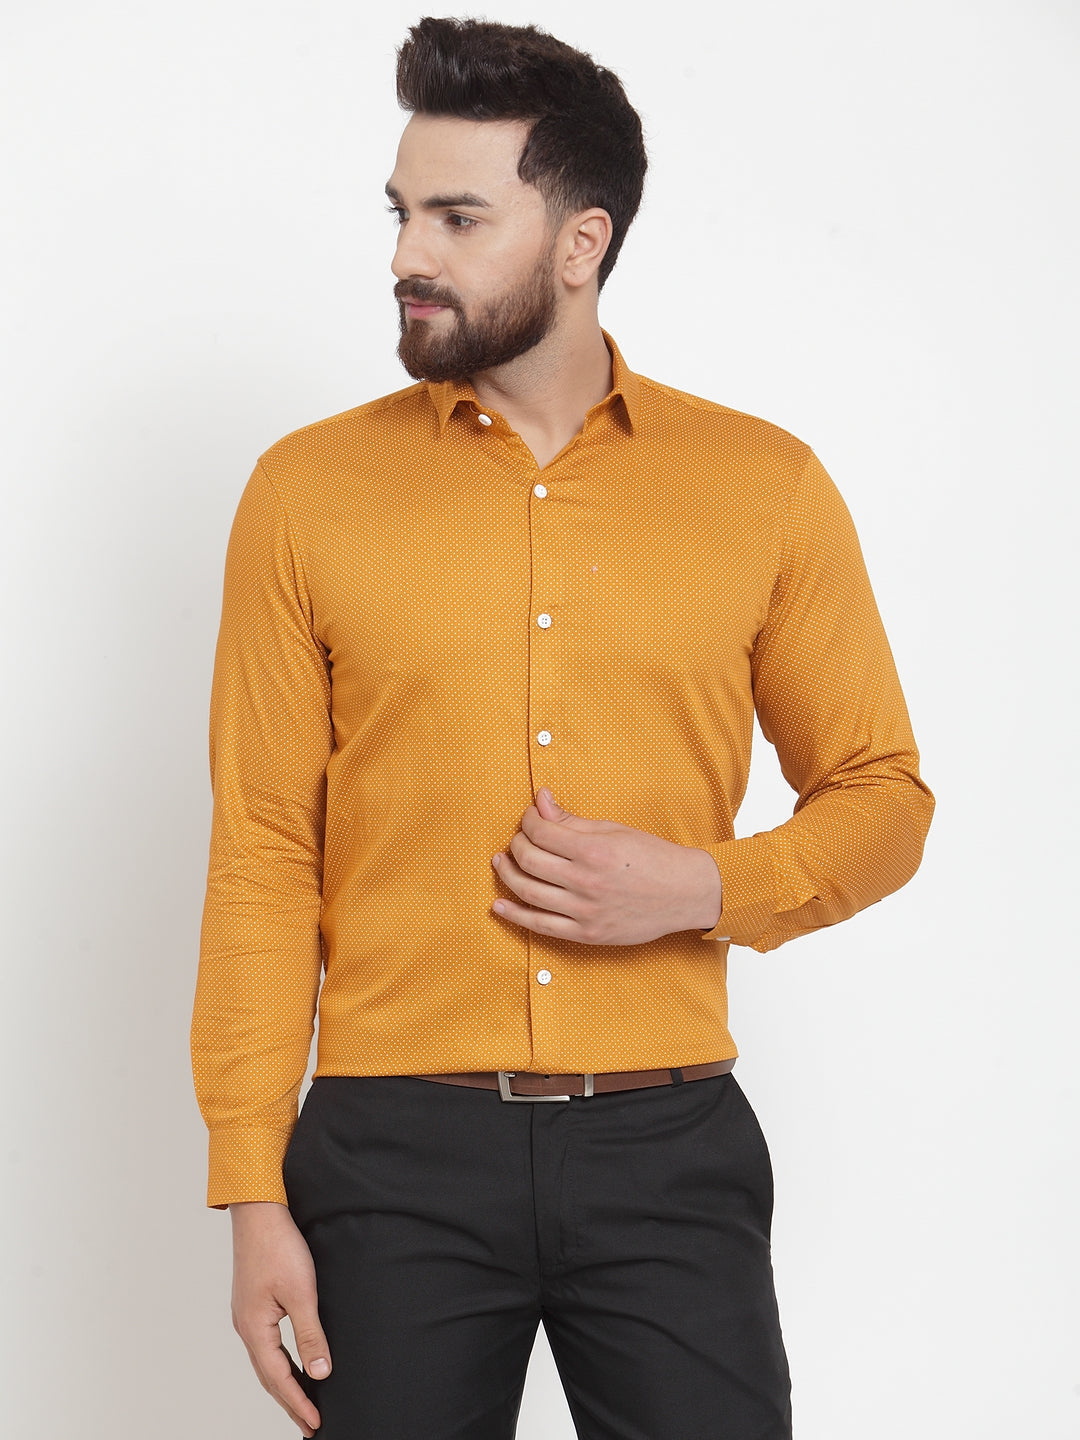 Men's Yellow Cotton Polka Dots Formal Shirts ( SF 736Mustard ) - Jainish